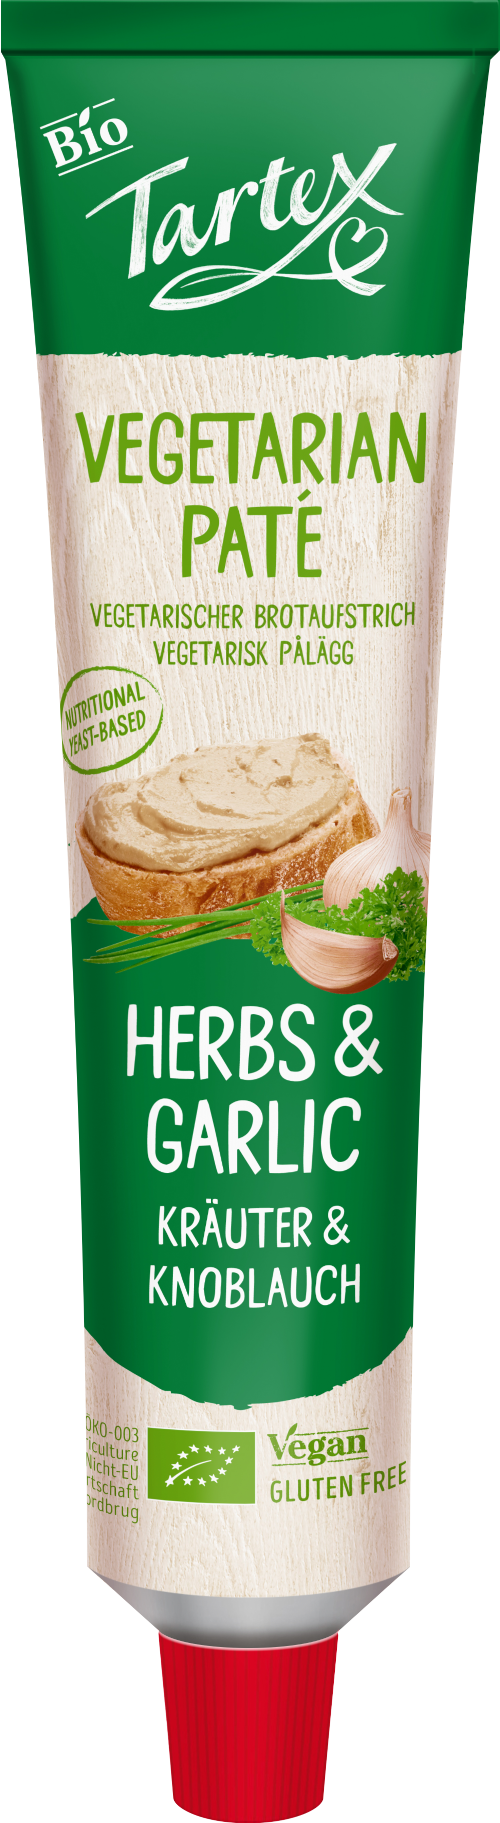 TARTEX Vegetarian Pate - Herbs & Garlic 200g